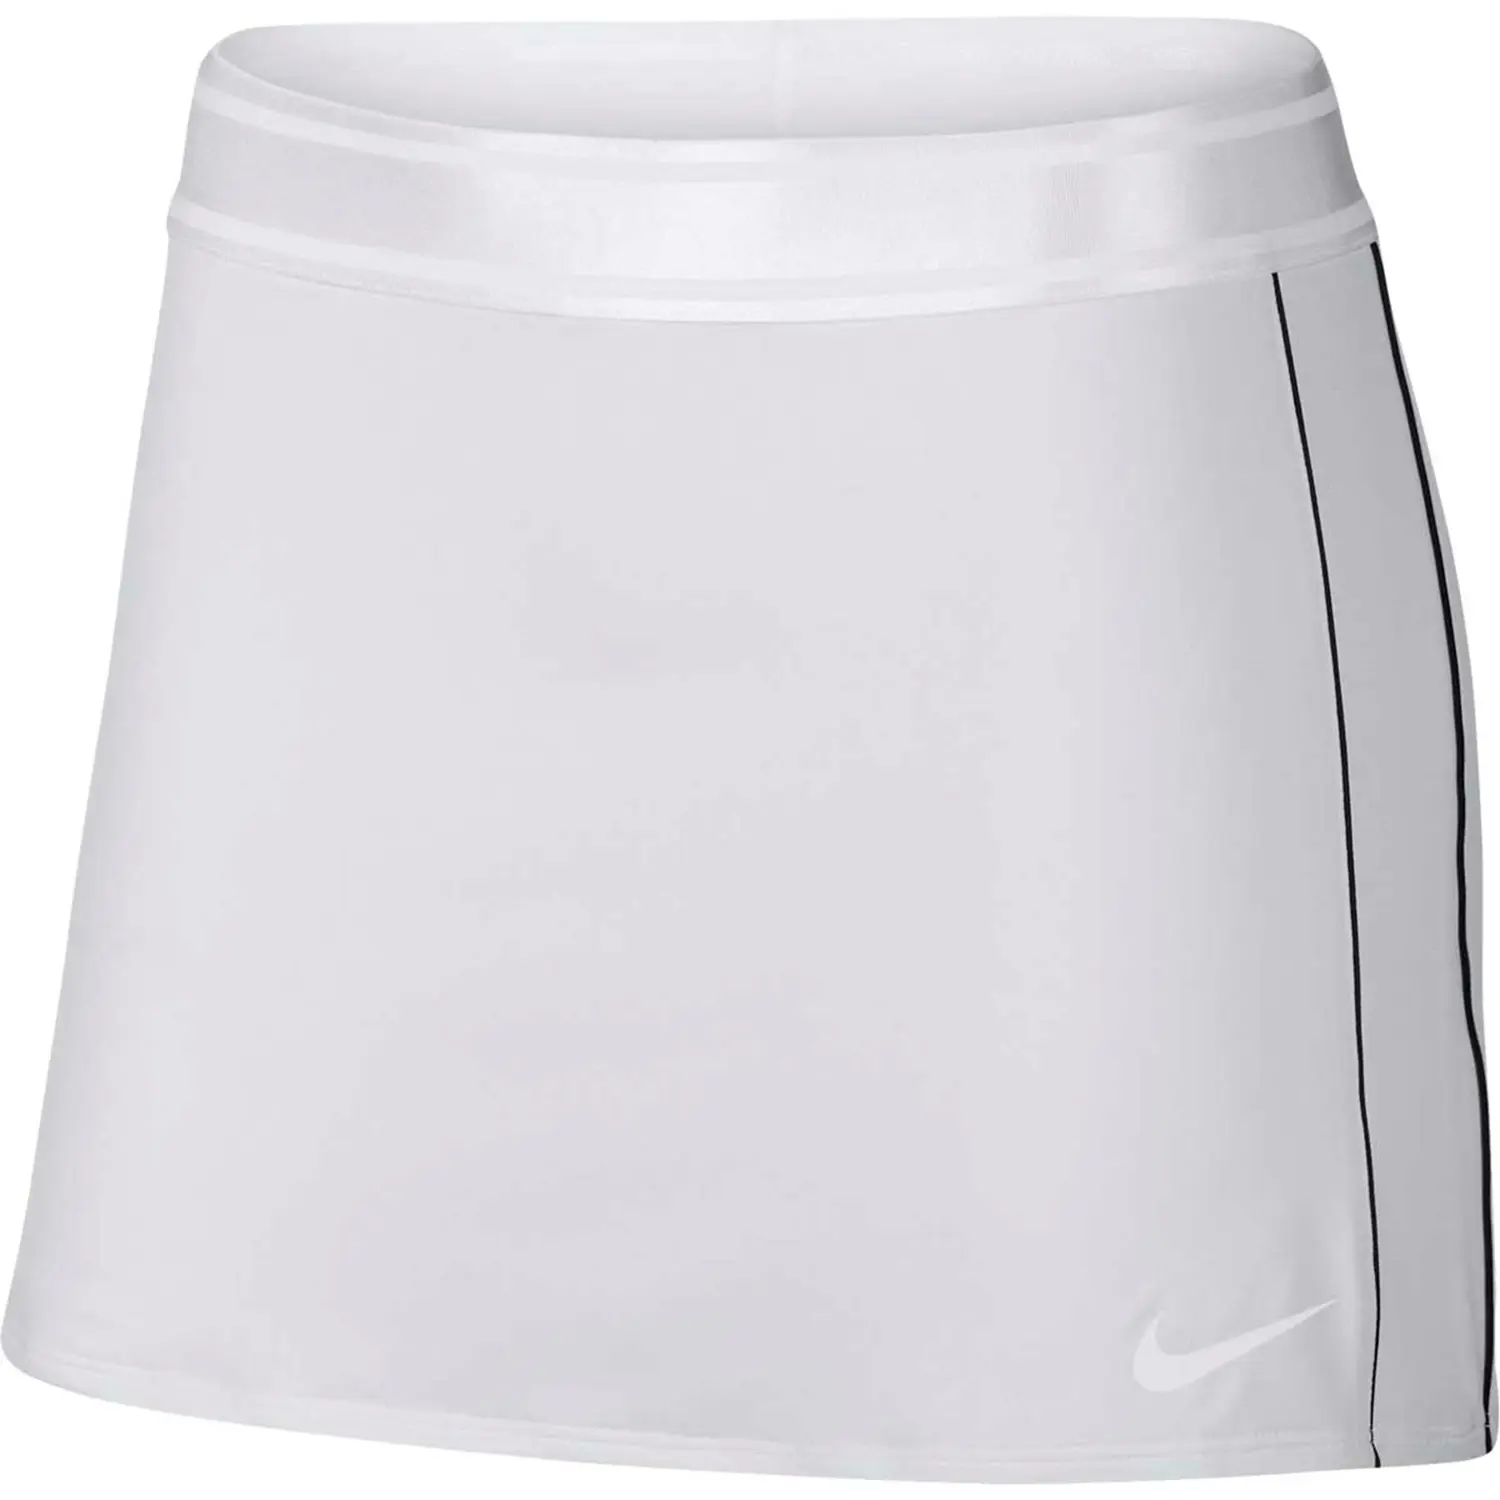 fusie Pas op gevolg Nike Court Dry Skirt tennis broek rok wit van badminton rokjes